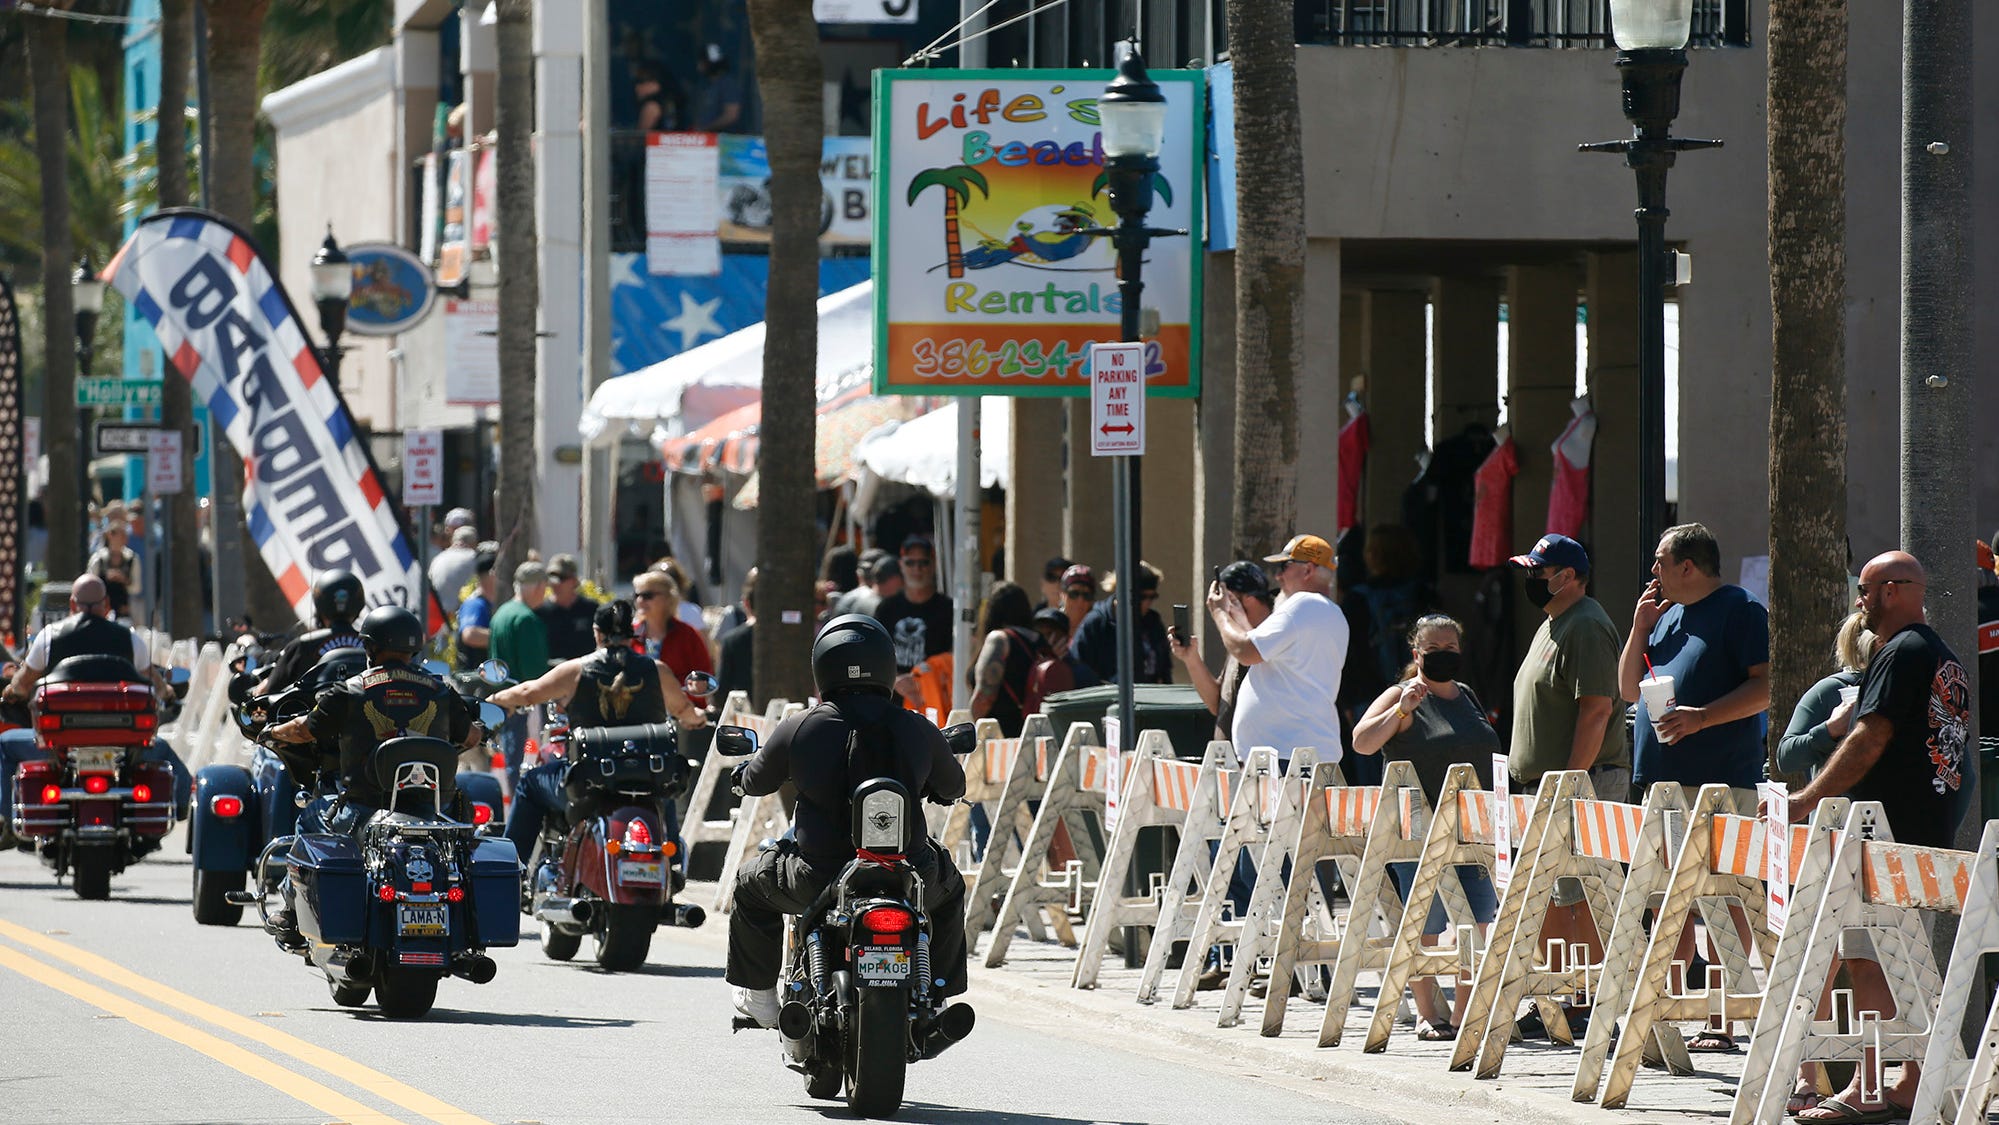 Bike Week opens in Daytona Beach with big crowds on Main Street